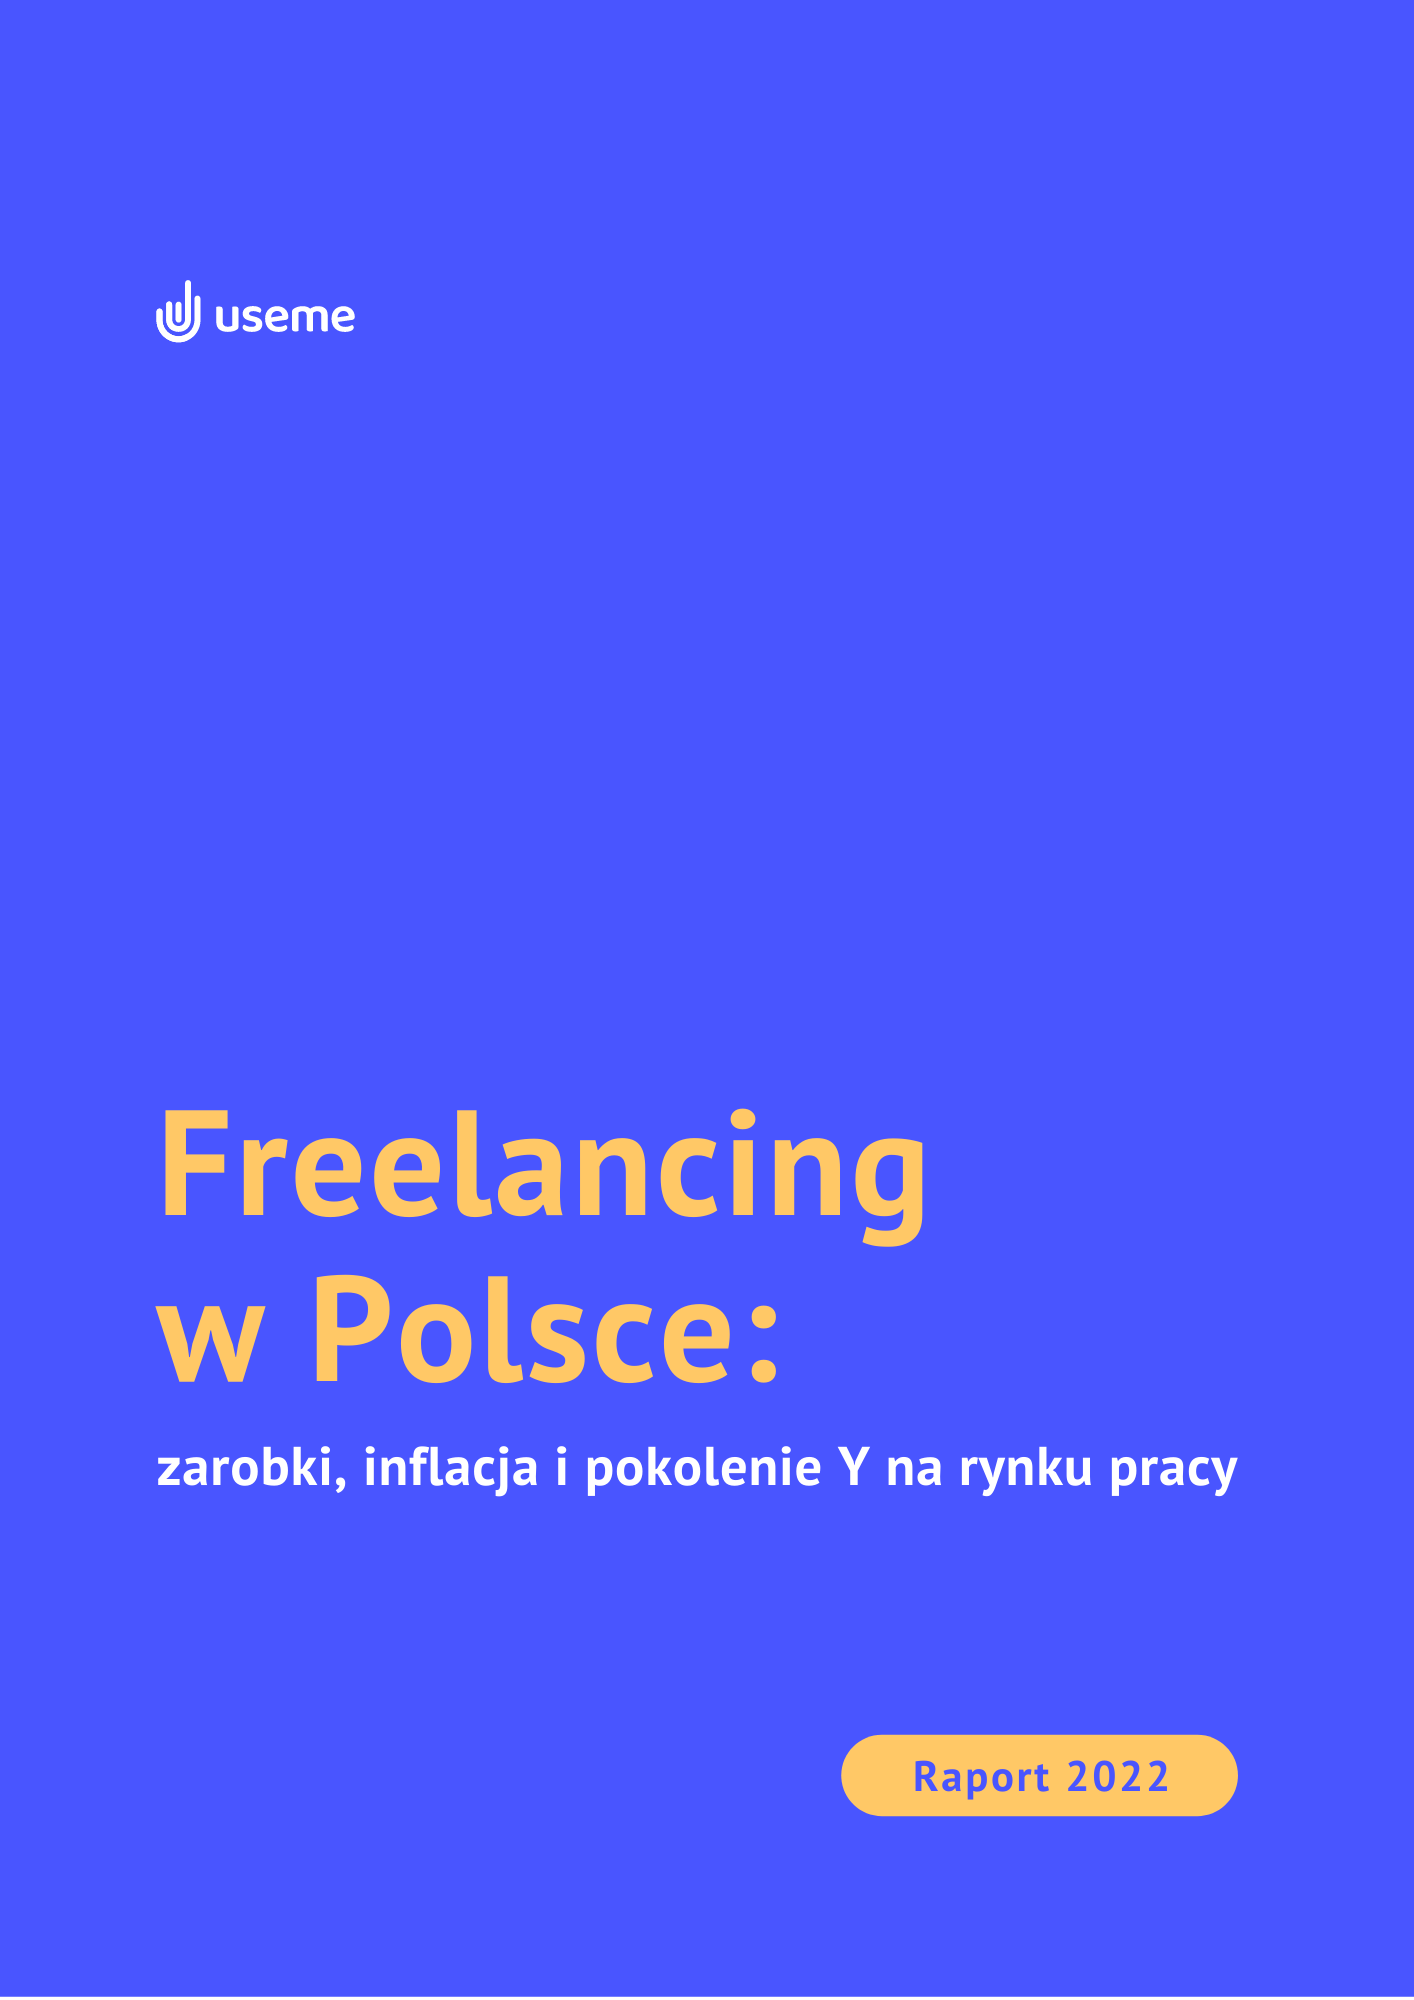 Okładka Raportu Useme Freelancing w Polsce 2022